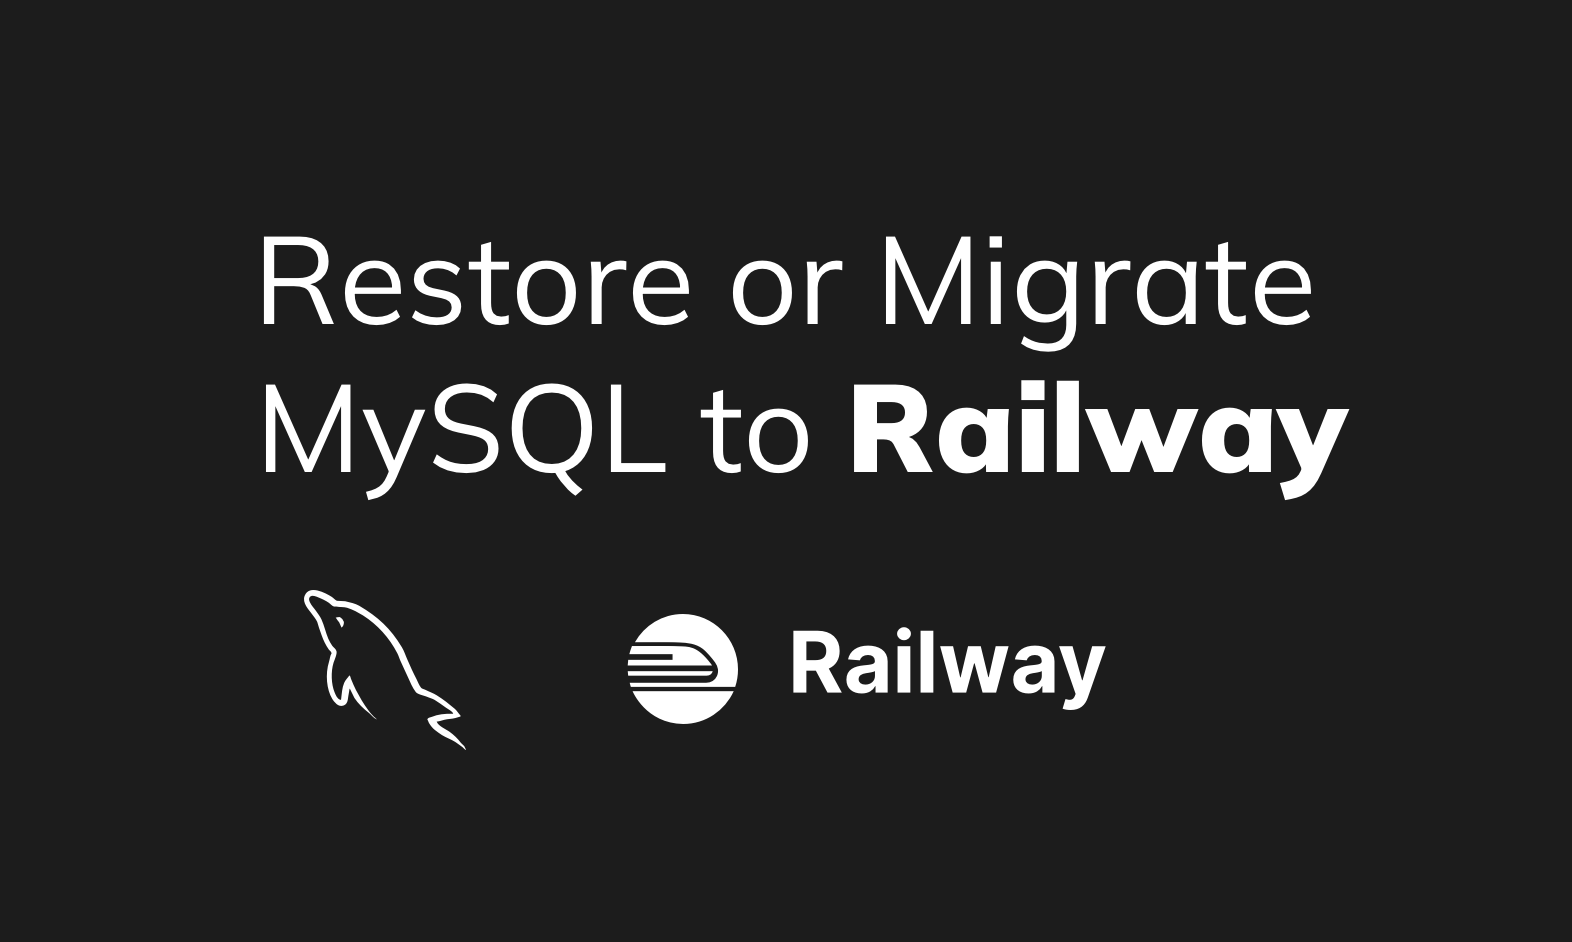 Restore or Migrate your MySQL Dump to Railway - Video tutorial